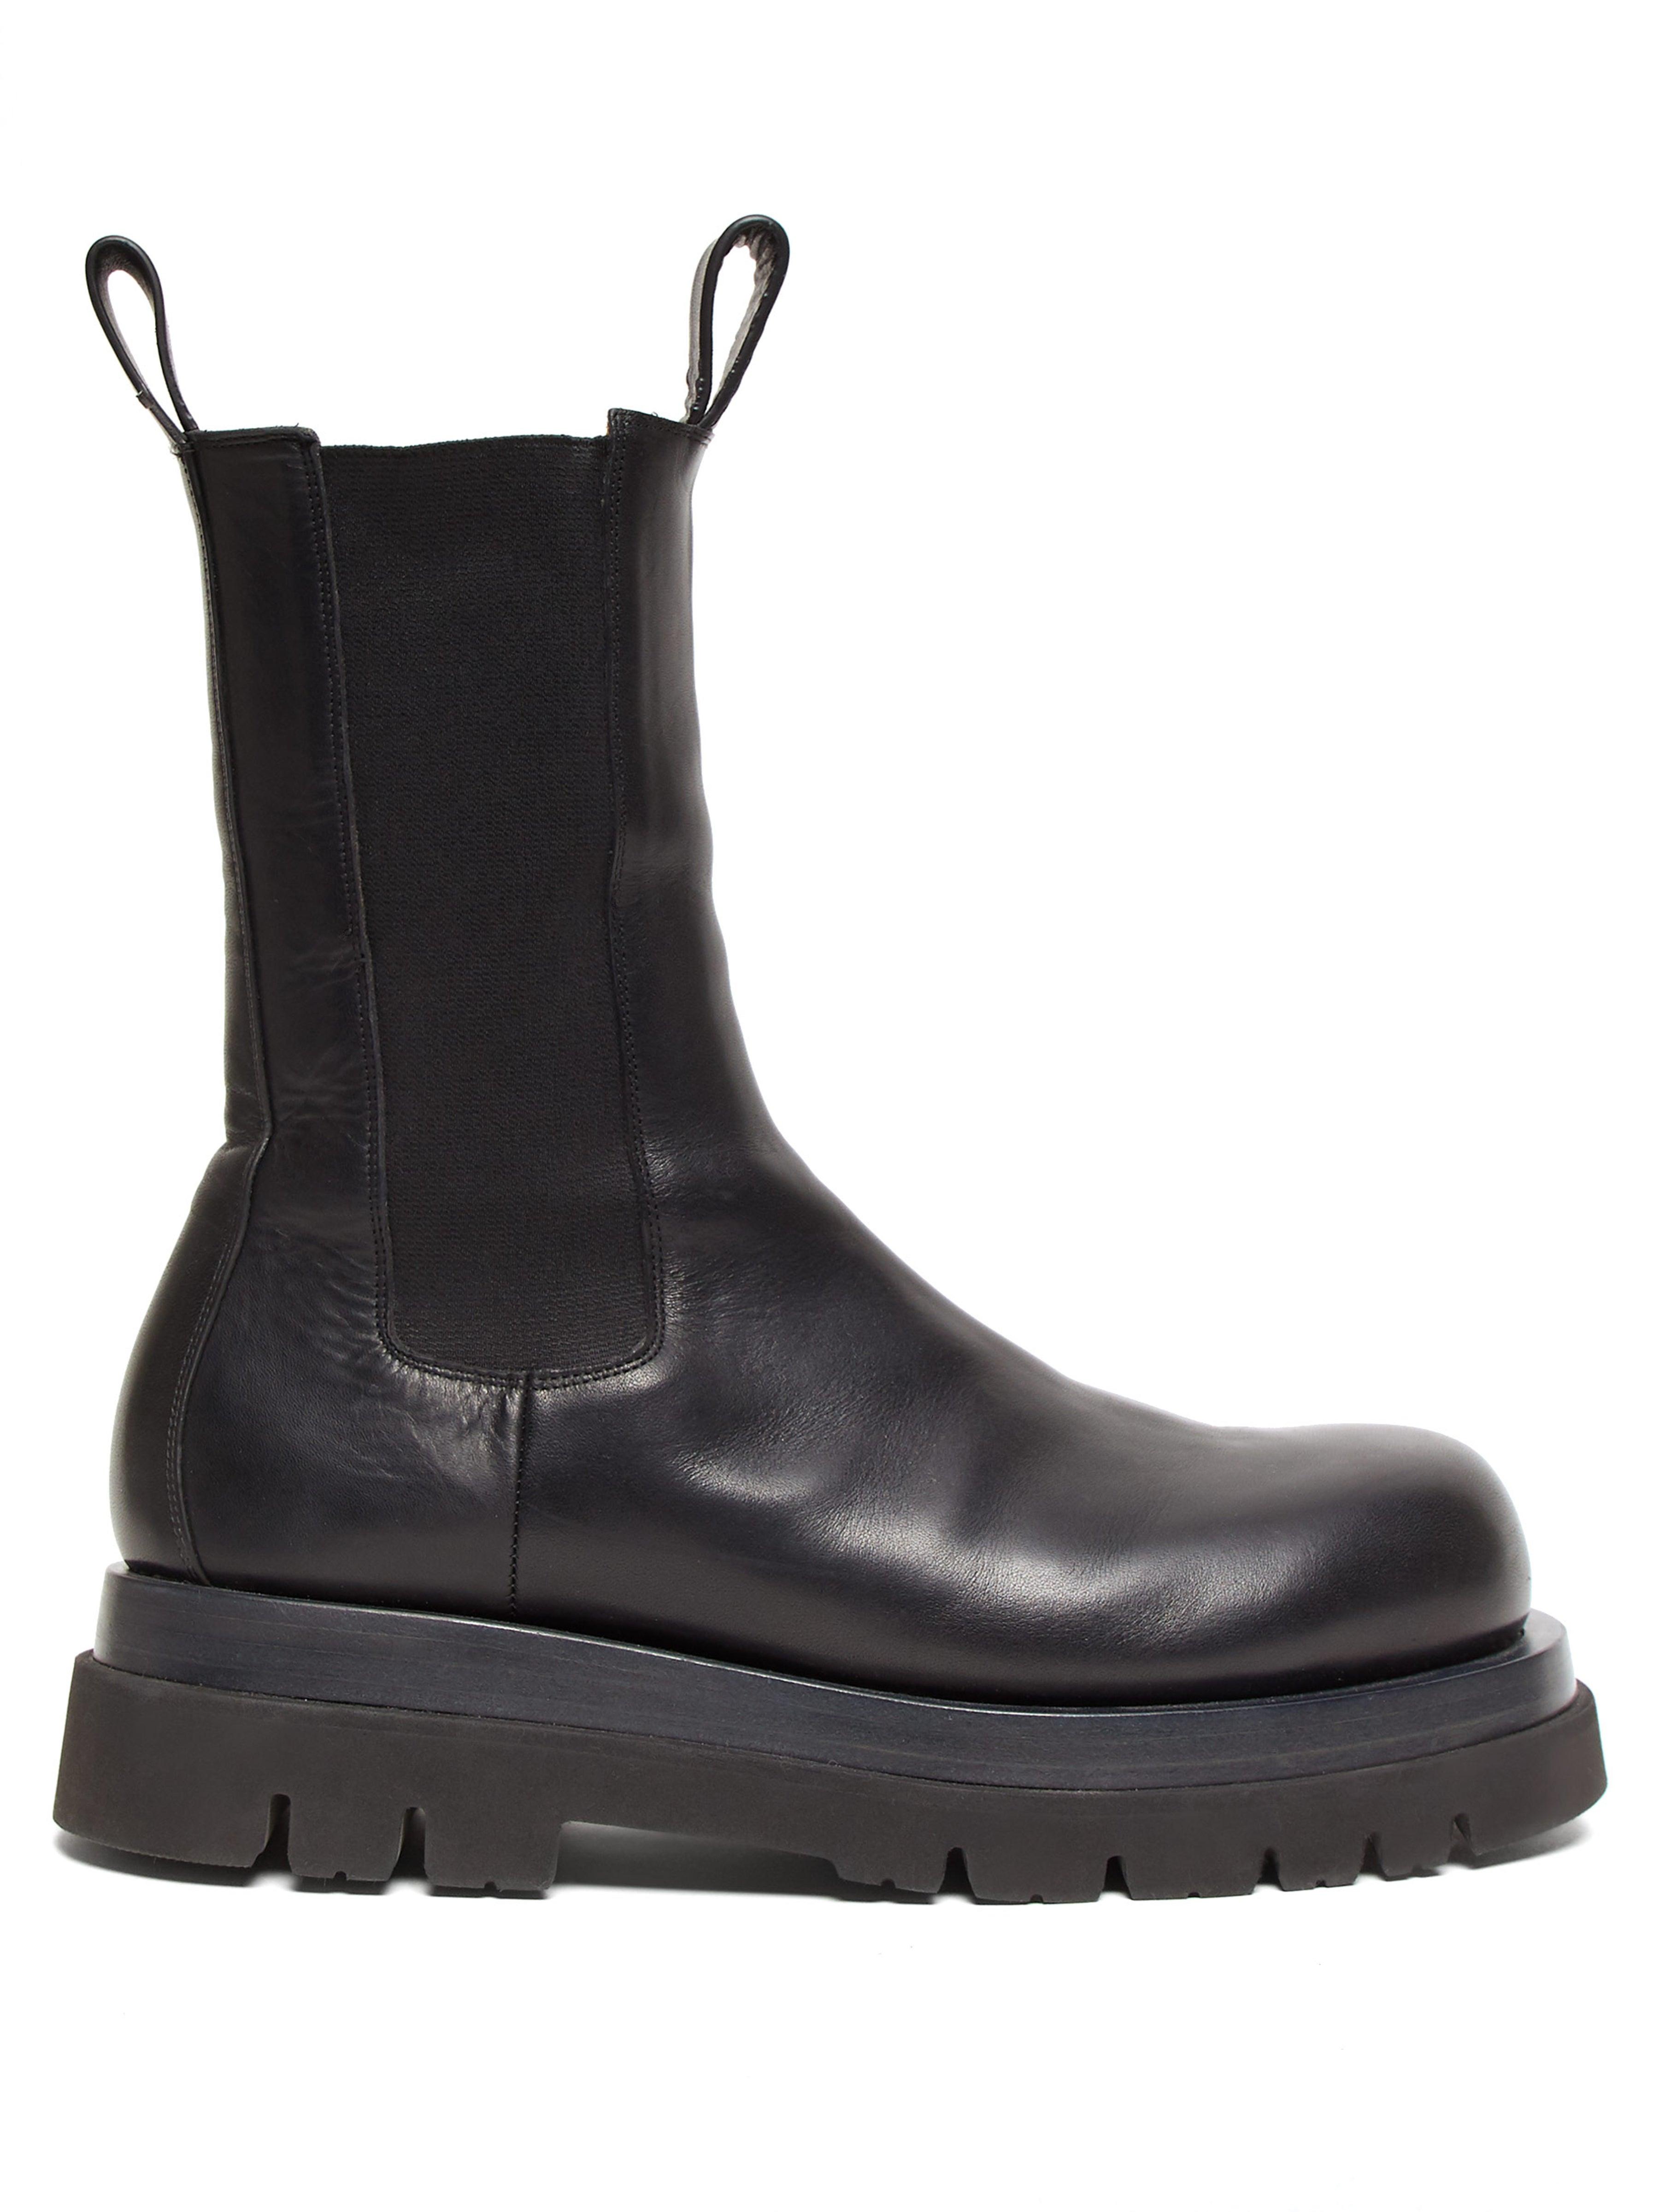 Bottega Veneta Tread Sole Leather Boots in Black for Men - Lyst